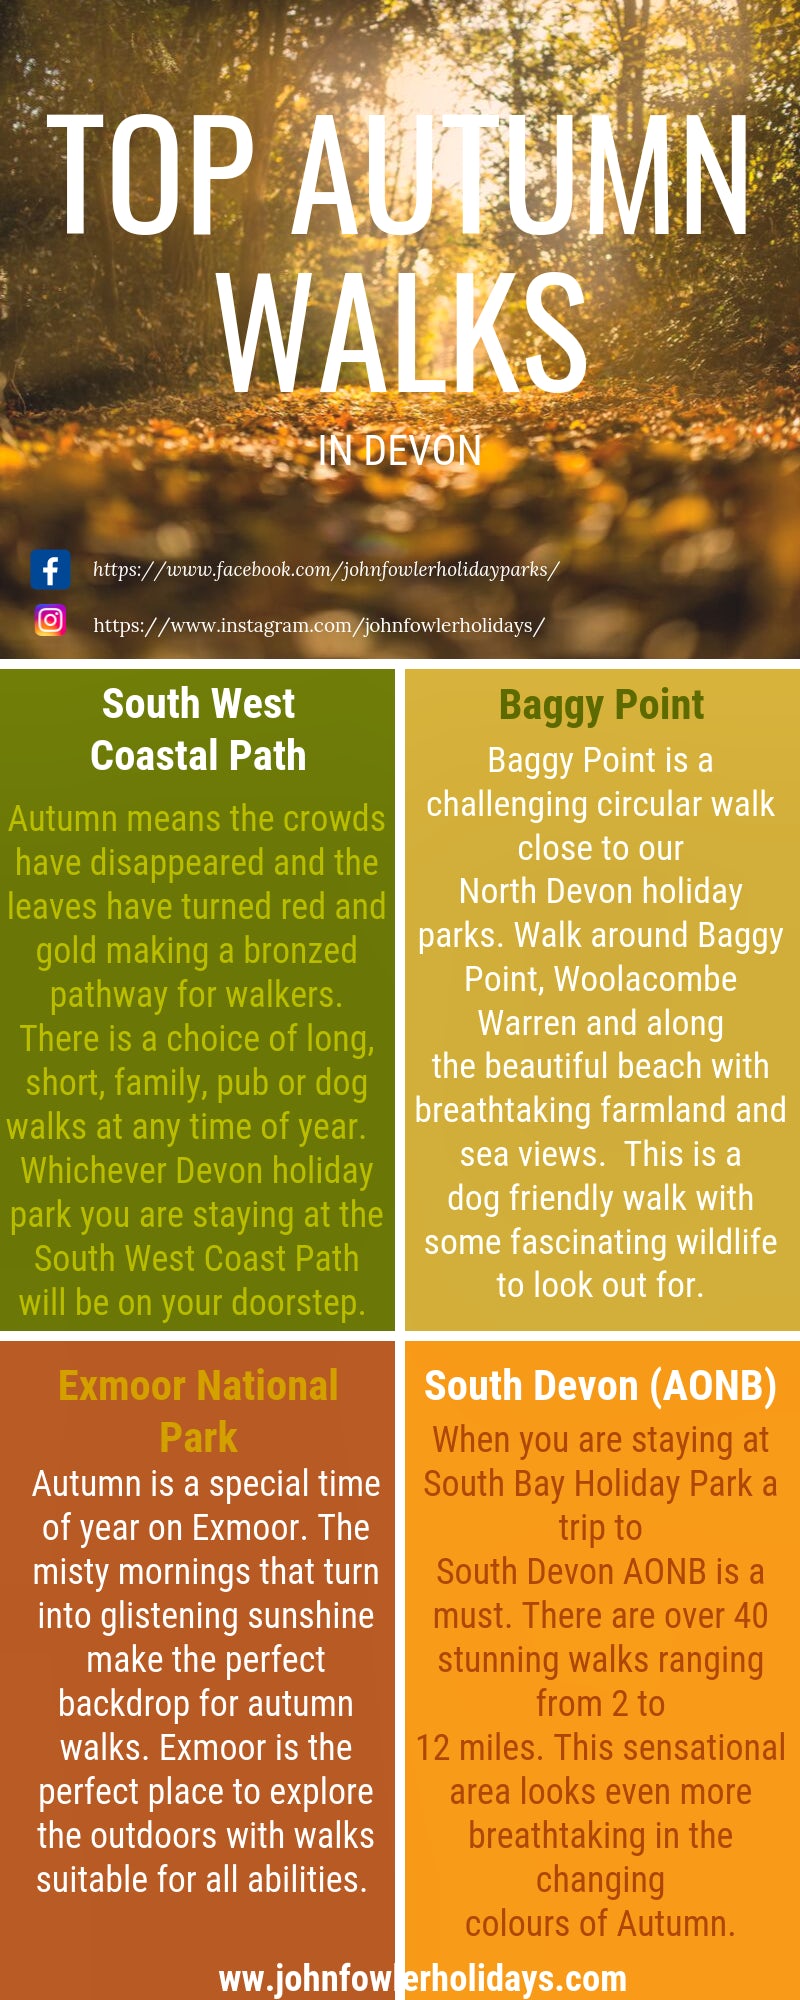 Top Autumn Walks in Devon | John Fowler Holidays Infographic 